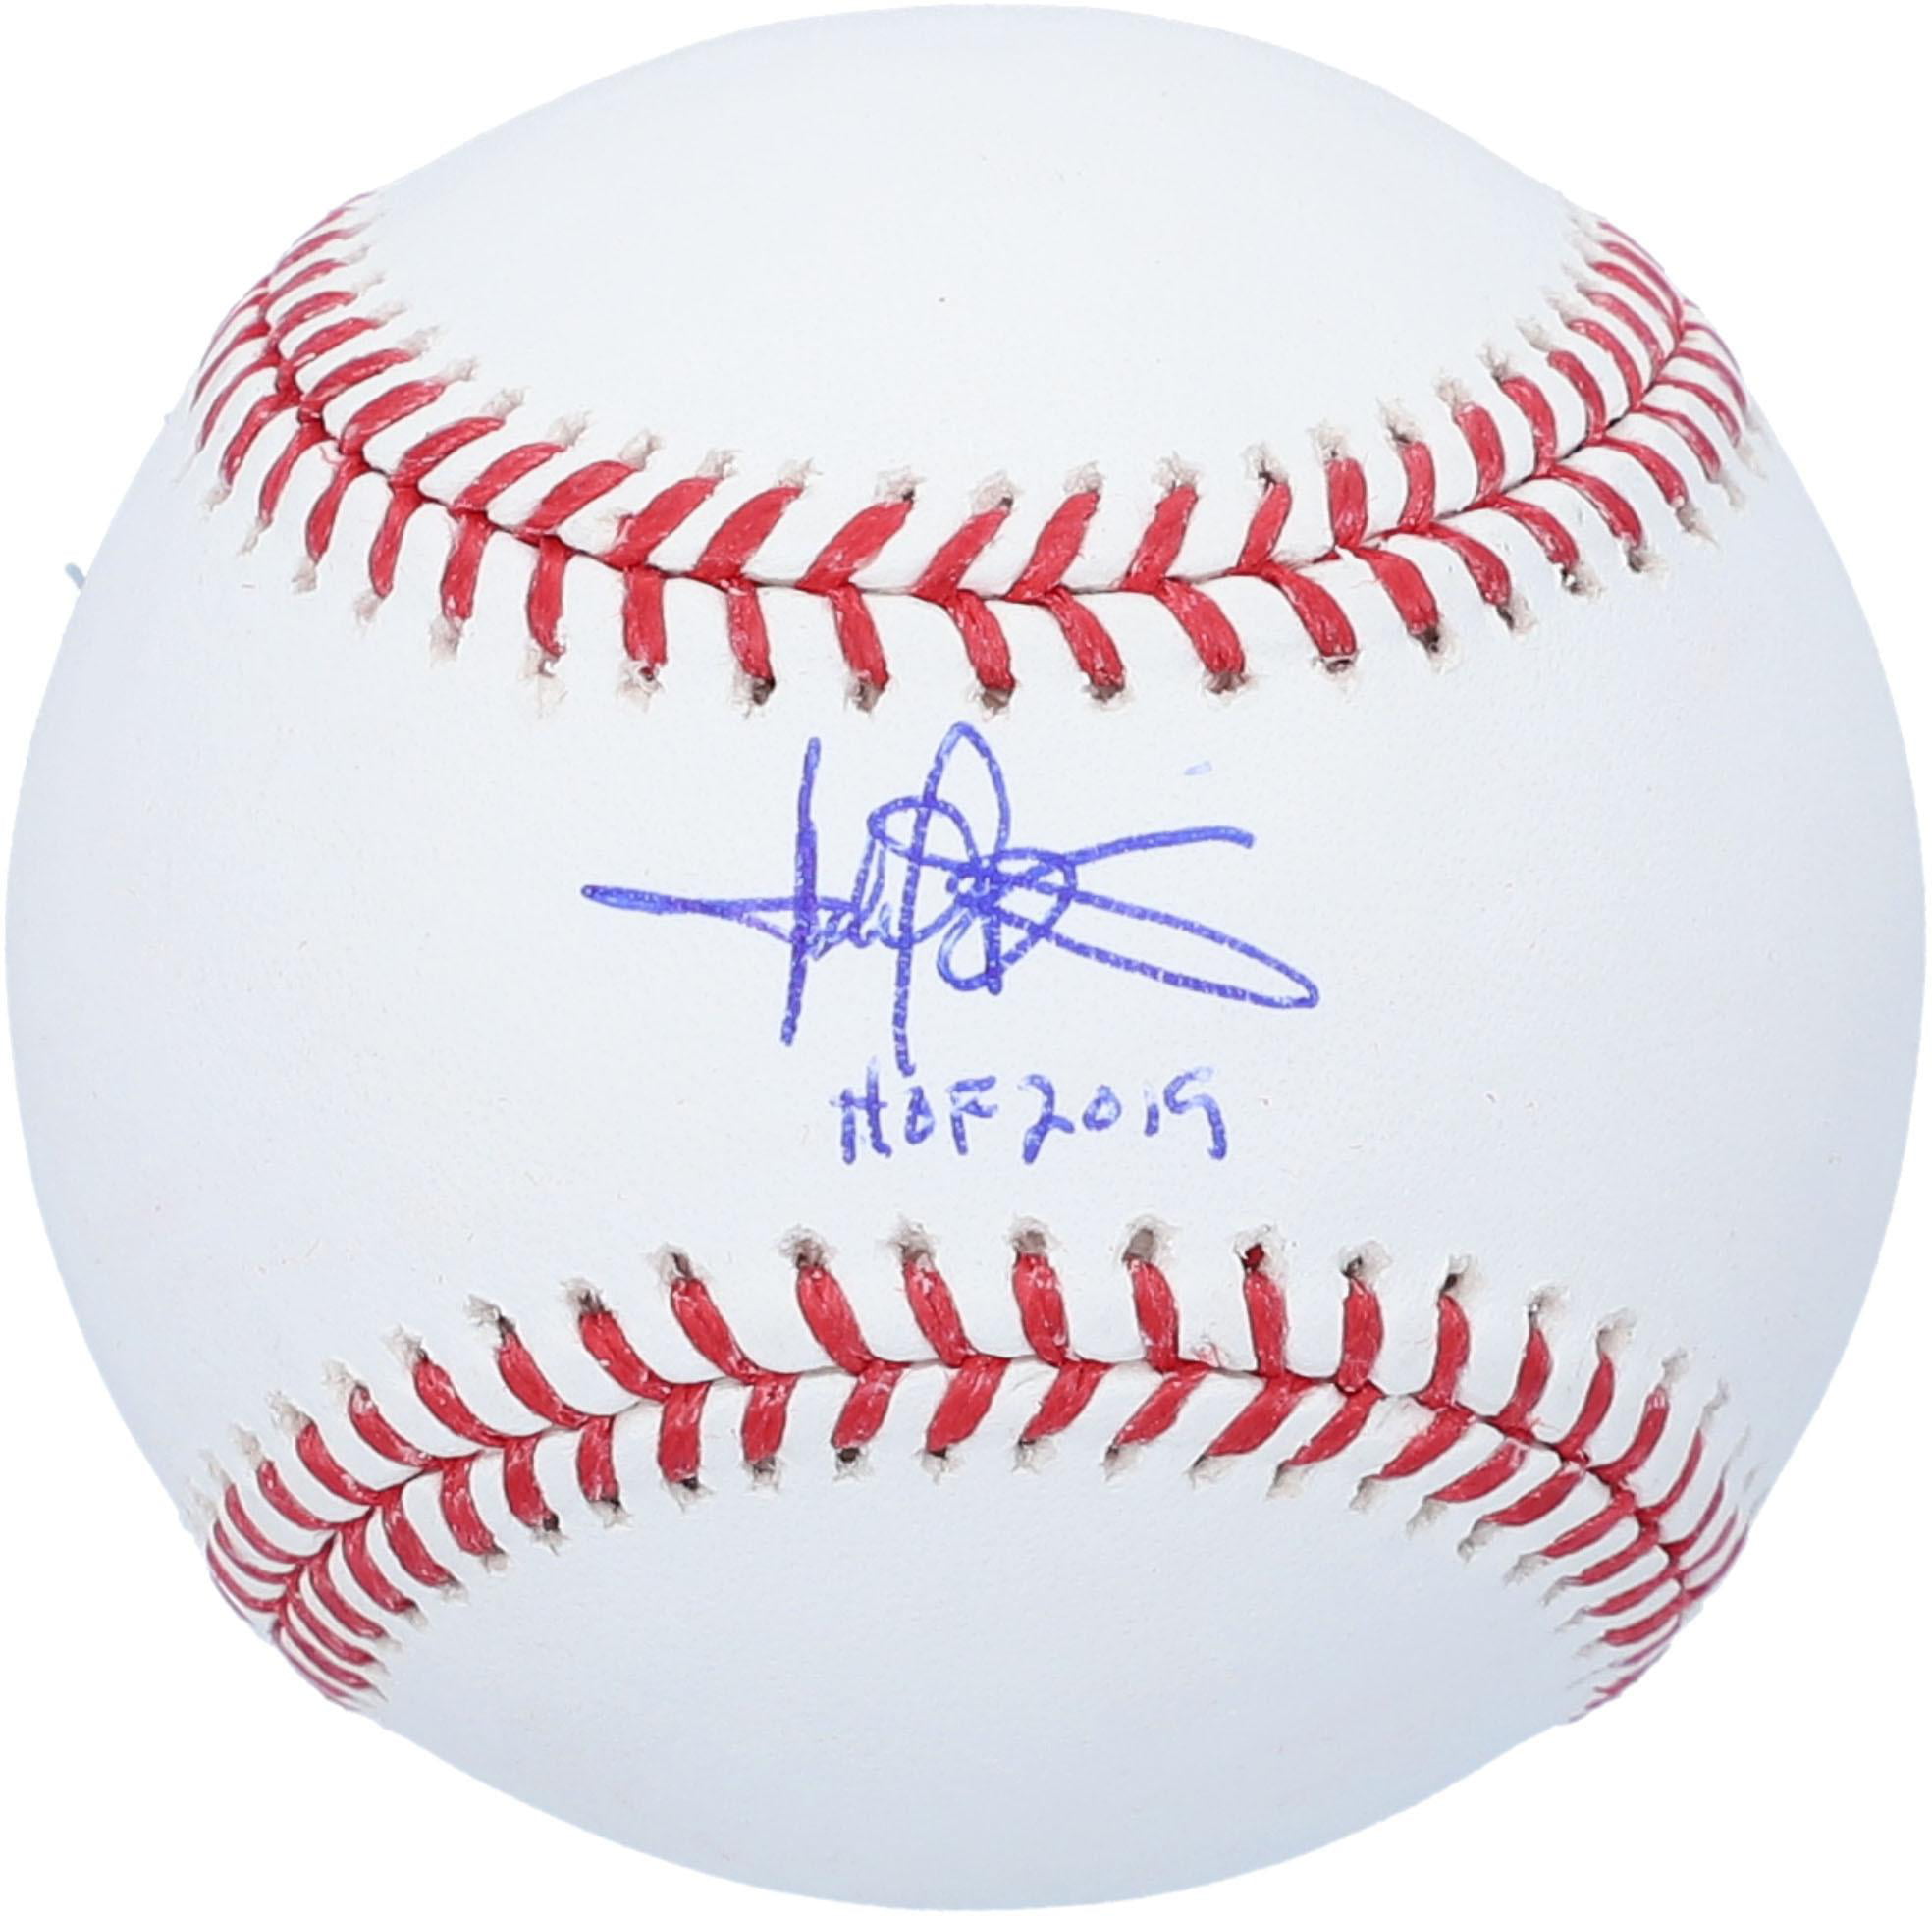 harold baines autographed baseball